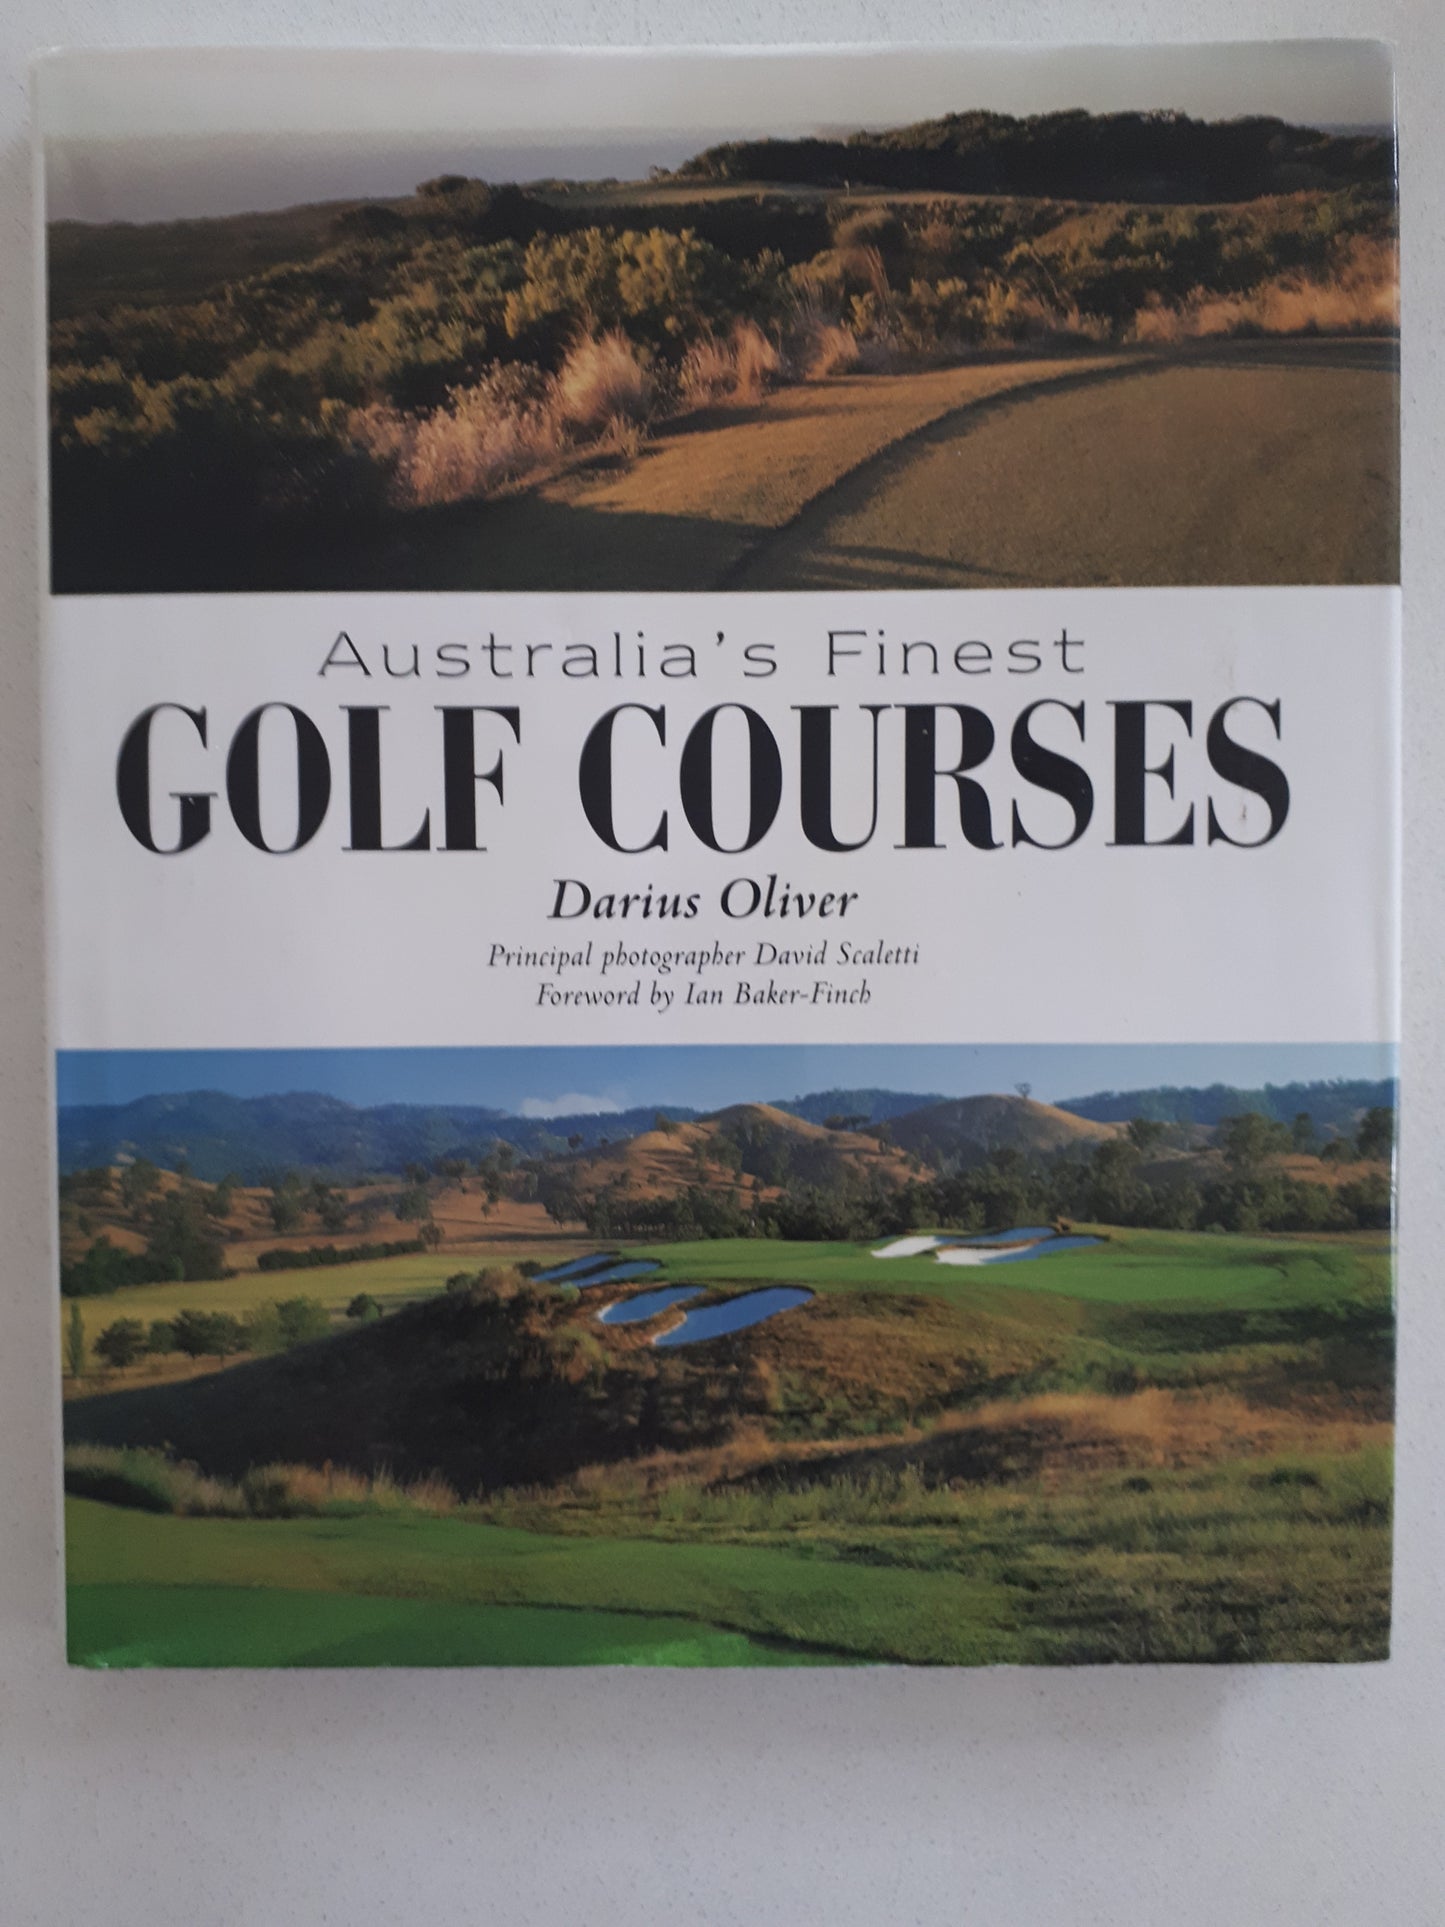 Australia's Finest Golf Courses by Darius Oliver